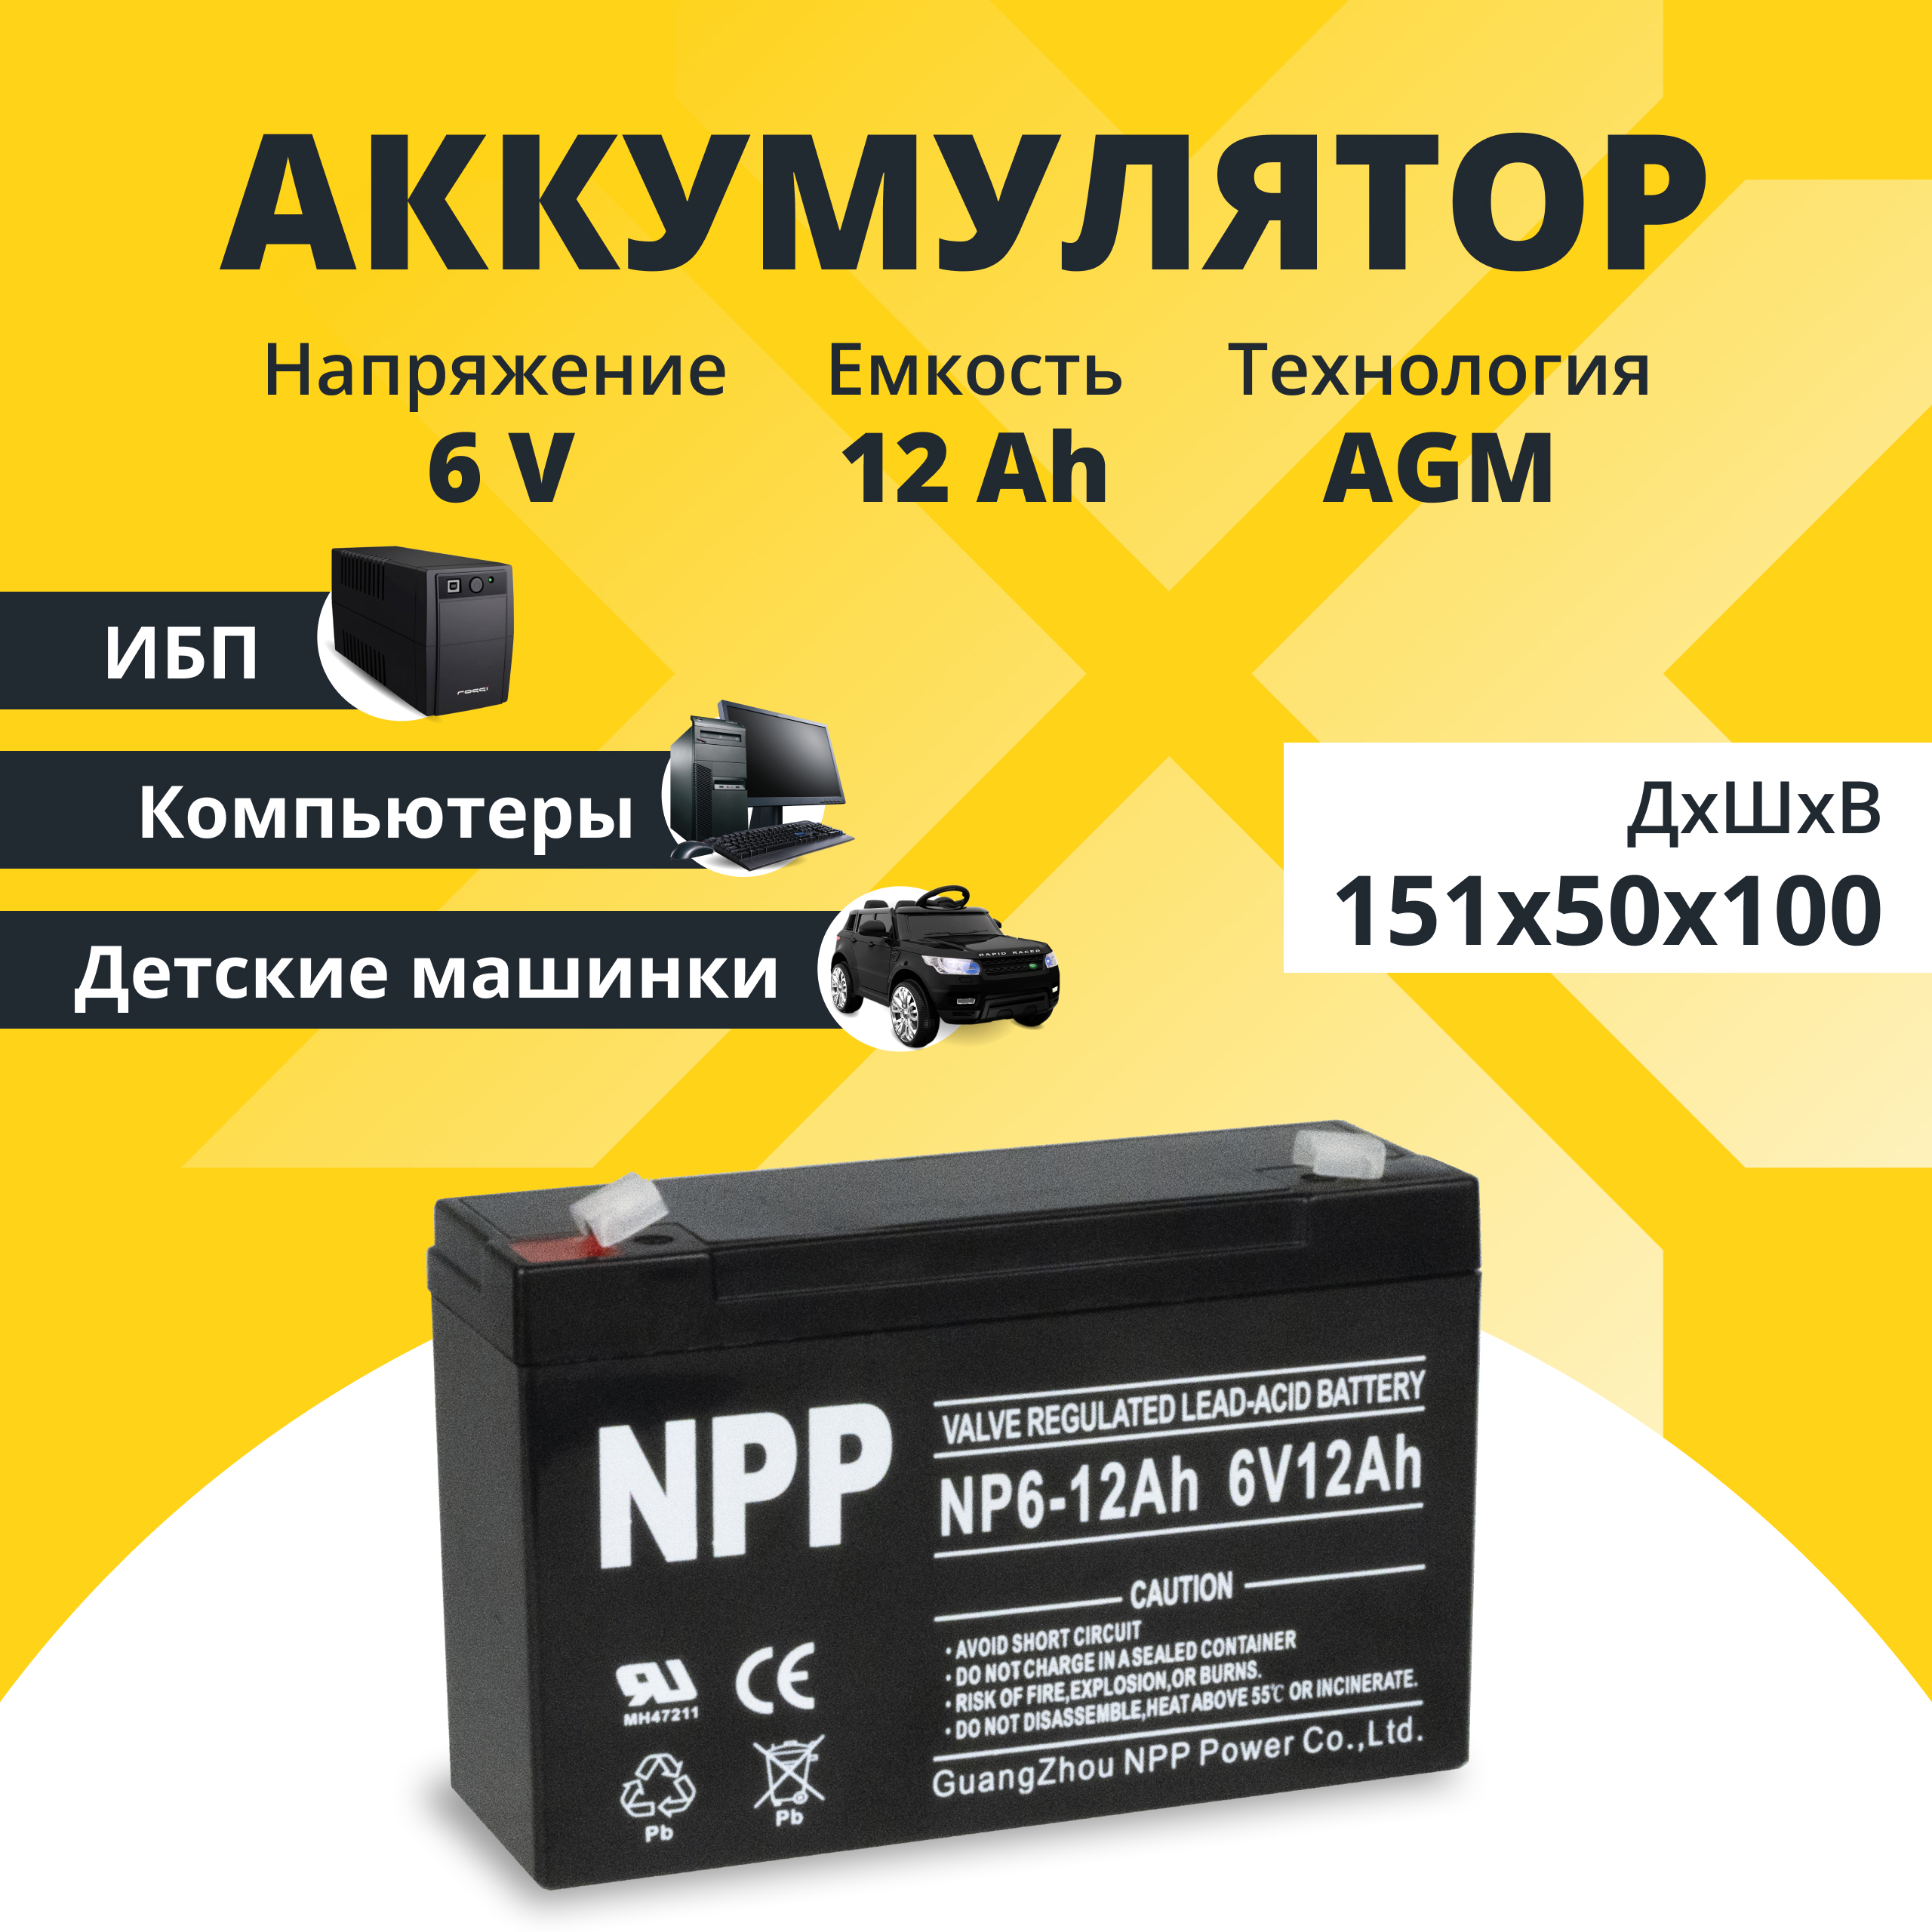 Аккумулятор для ибп NPP 6v 12Ah F1/T1 NP6-12Ah